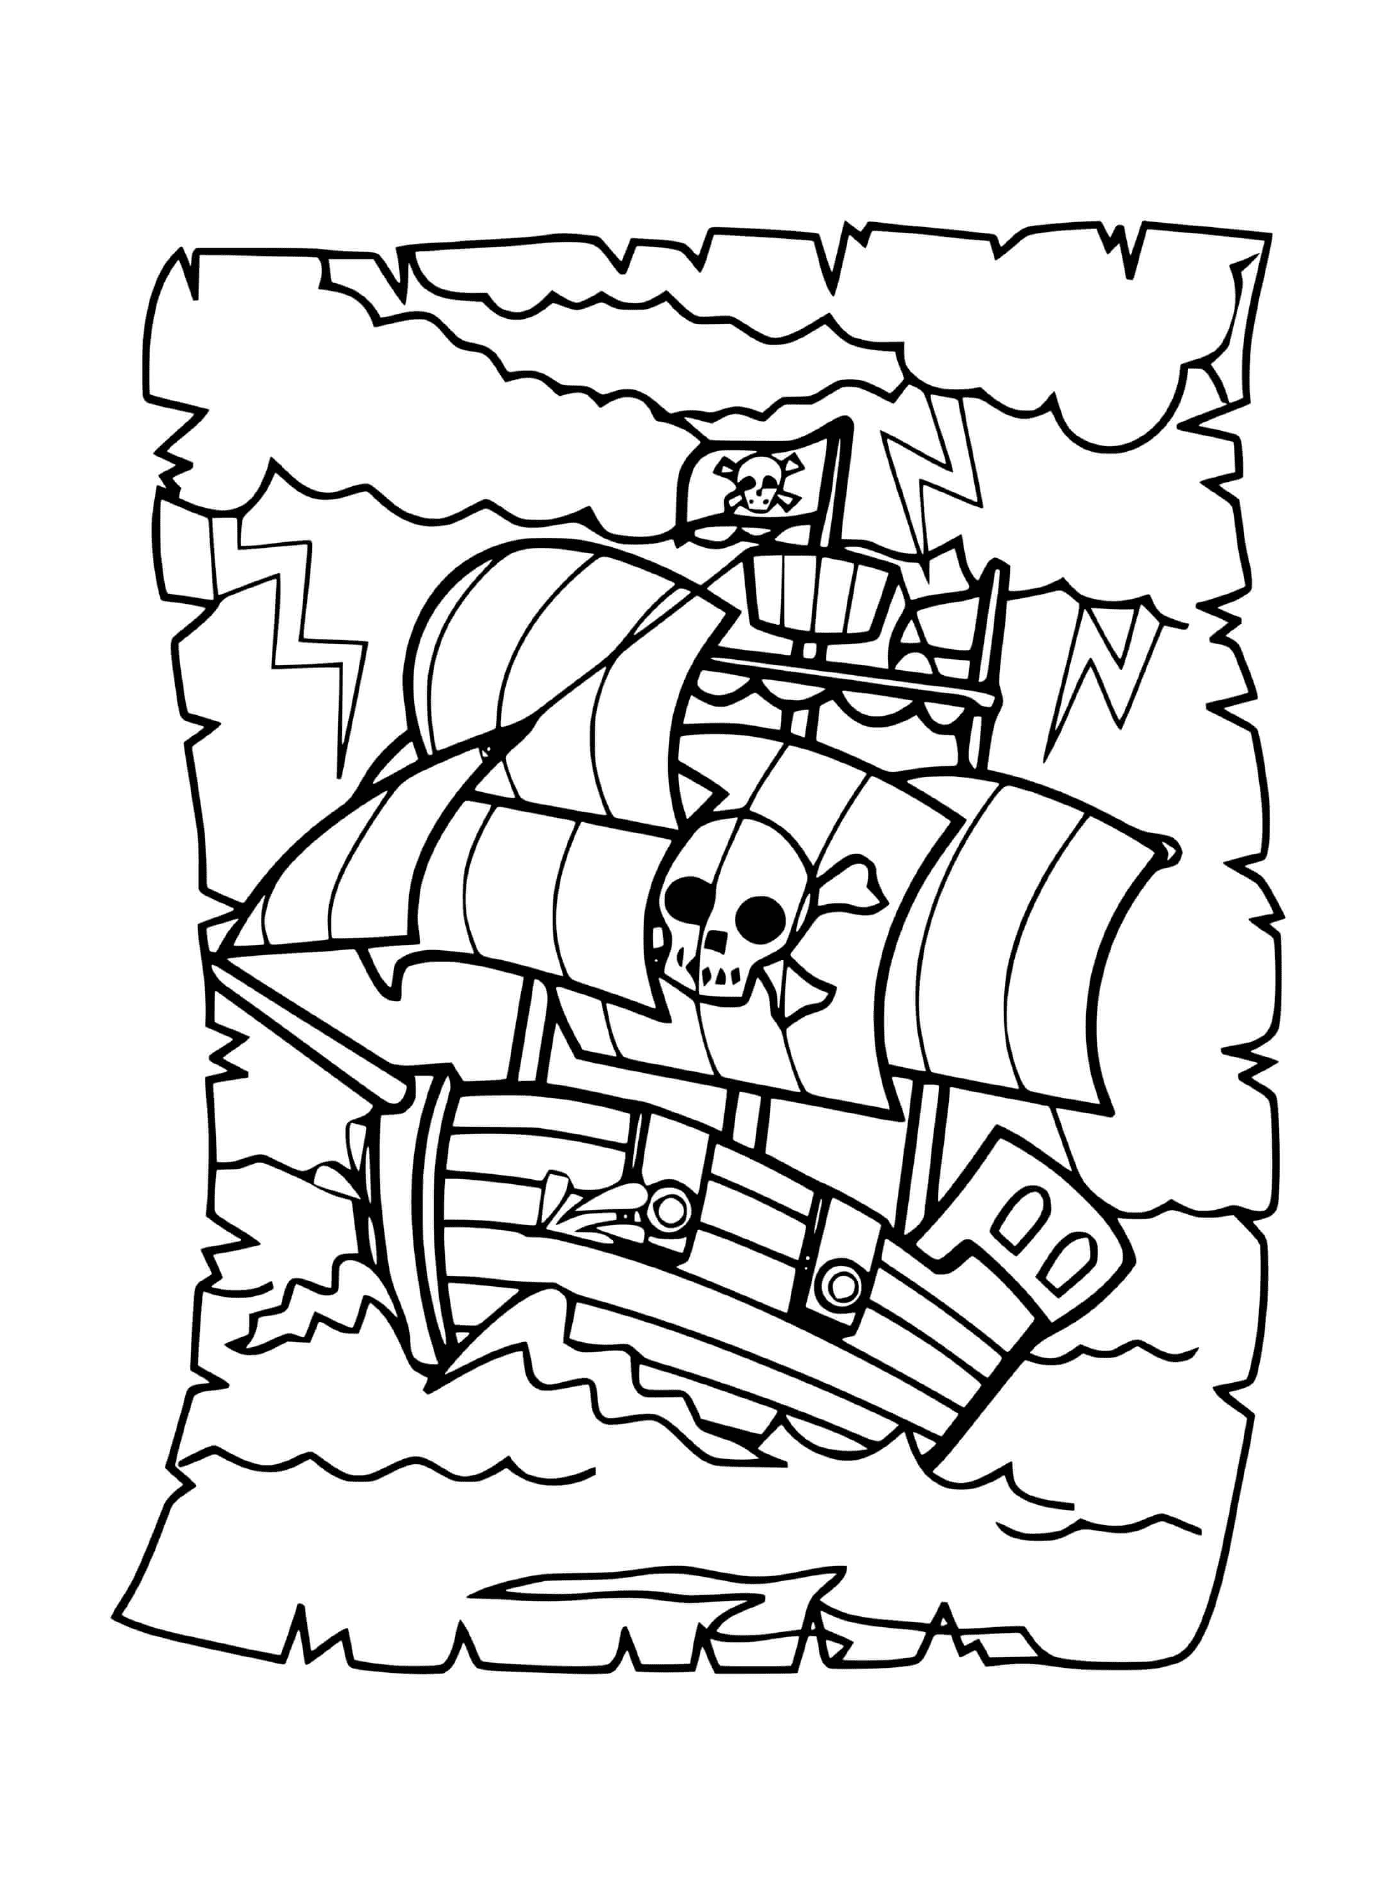  Pirata, barco cruzando olas intensas 